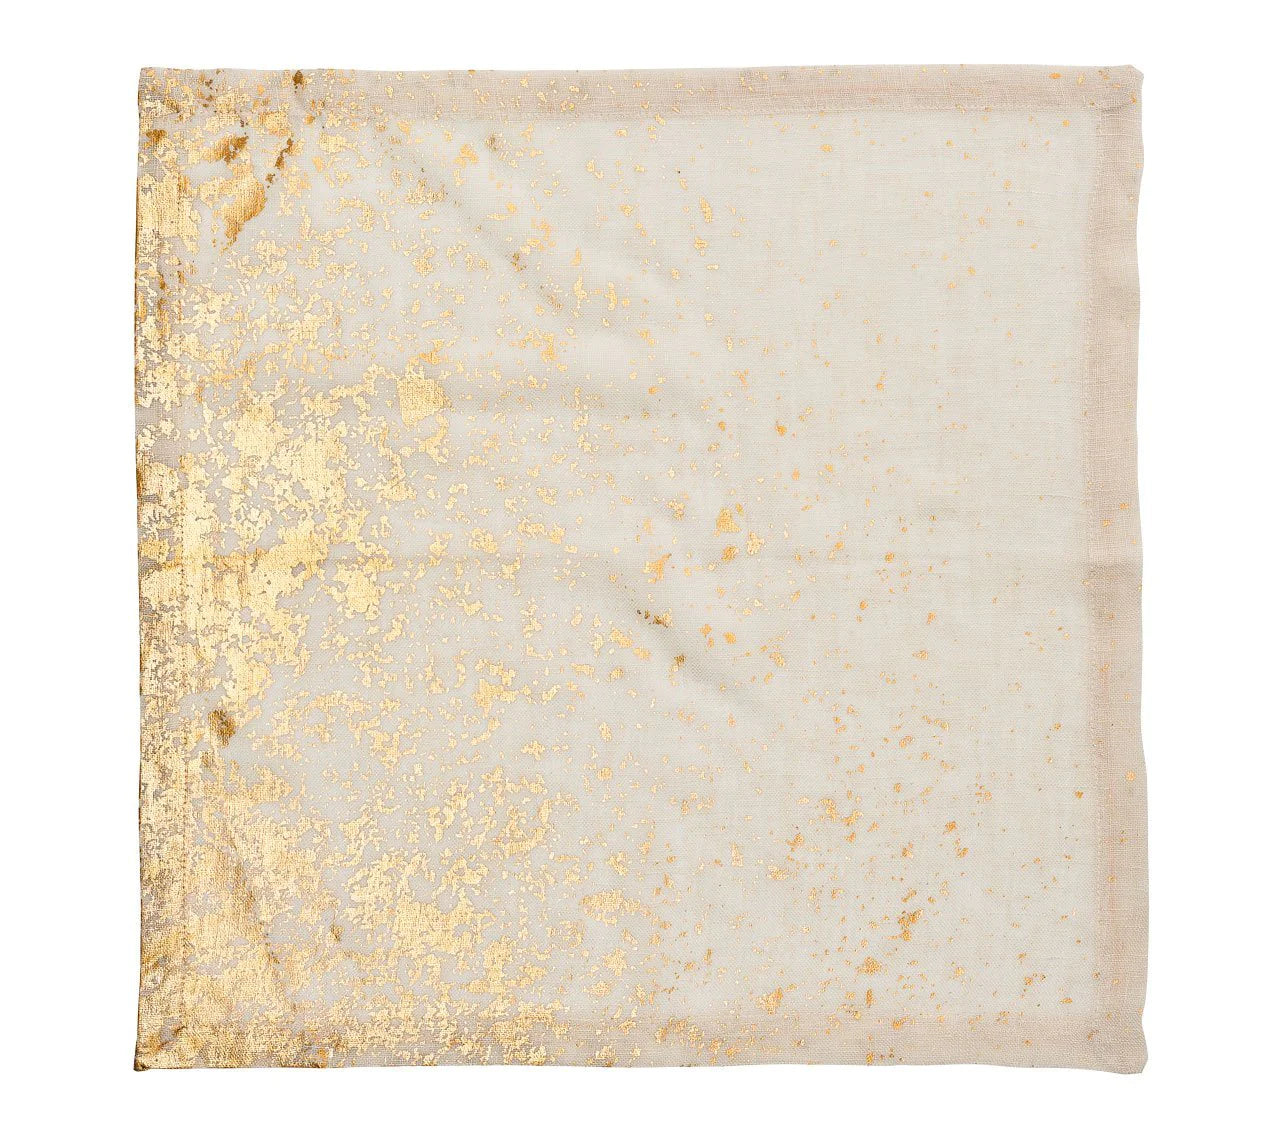 Metafoil Napkin in White & Gold , Set of 4